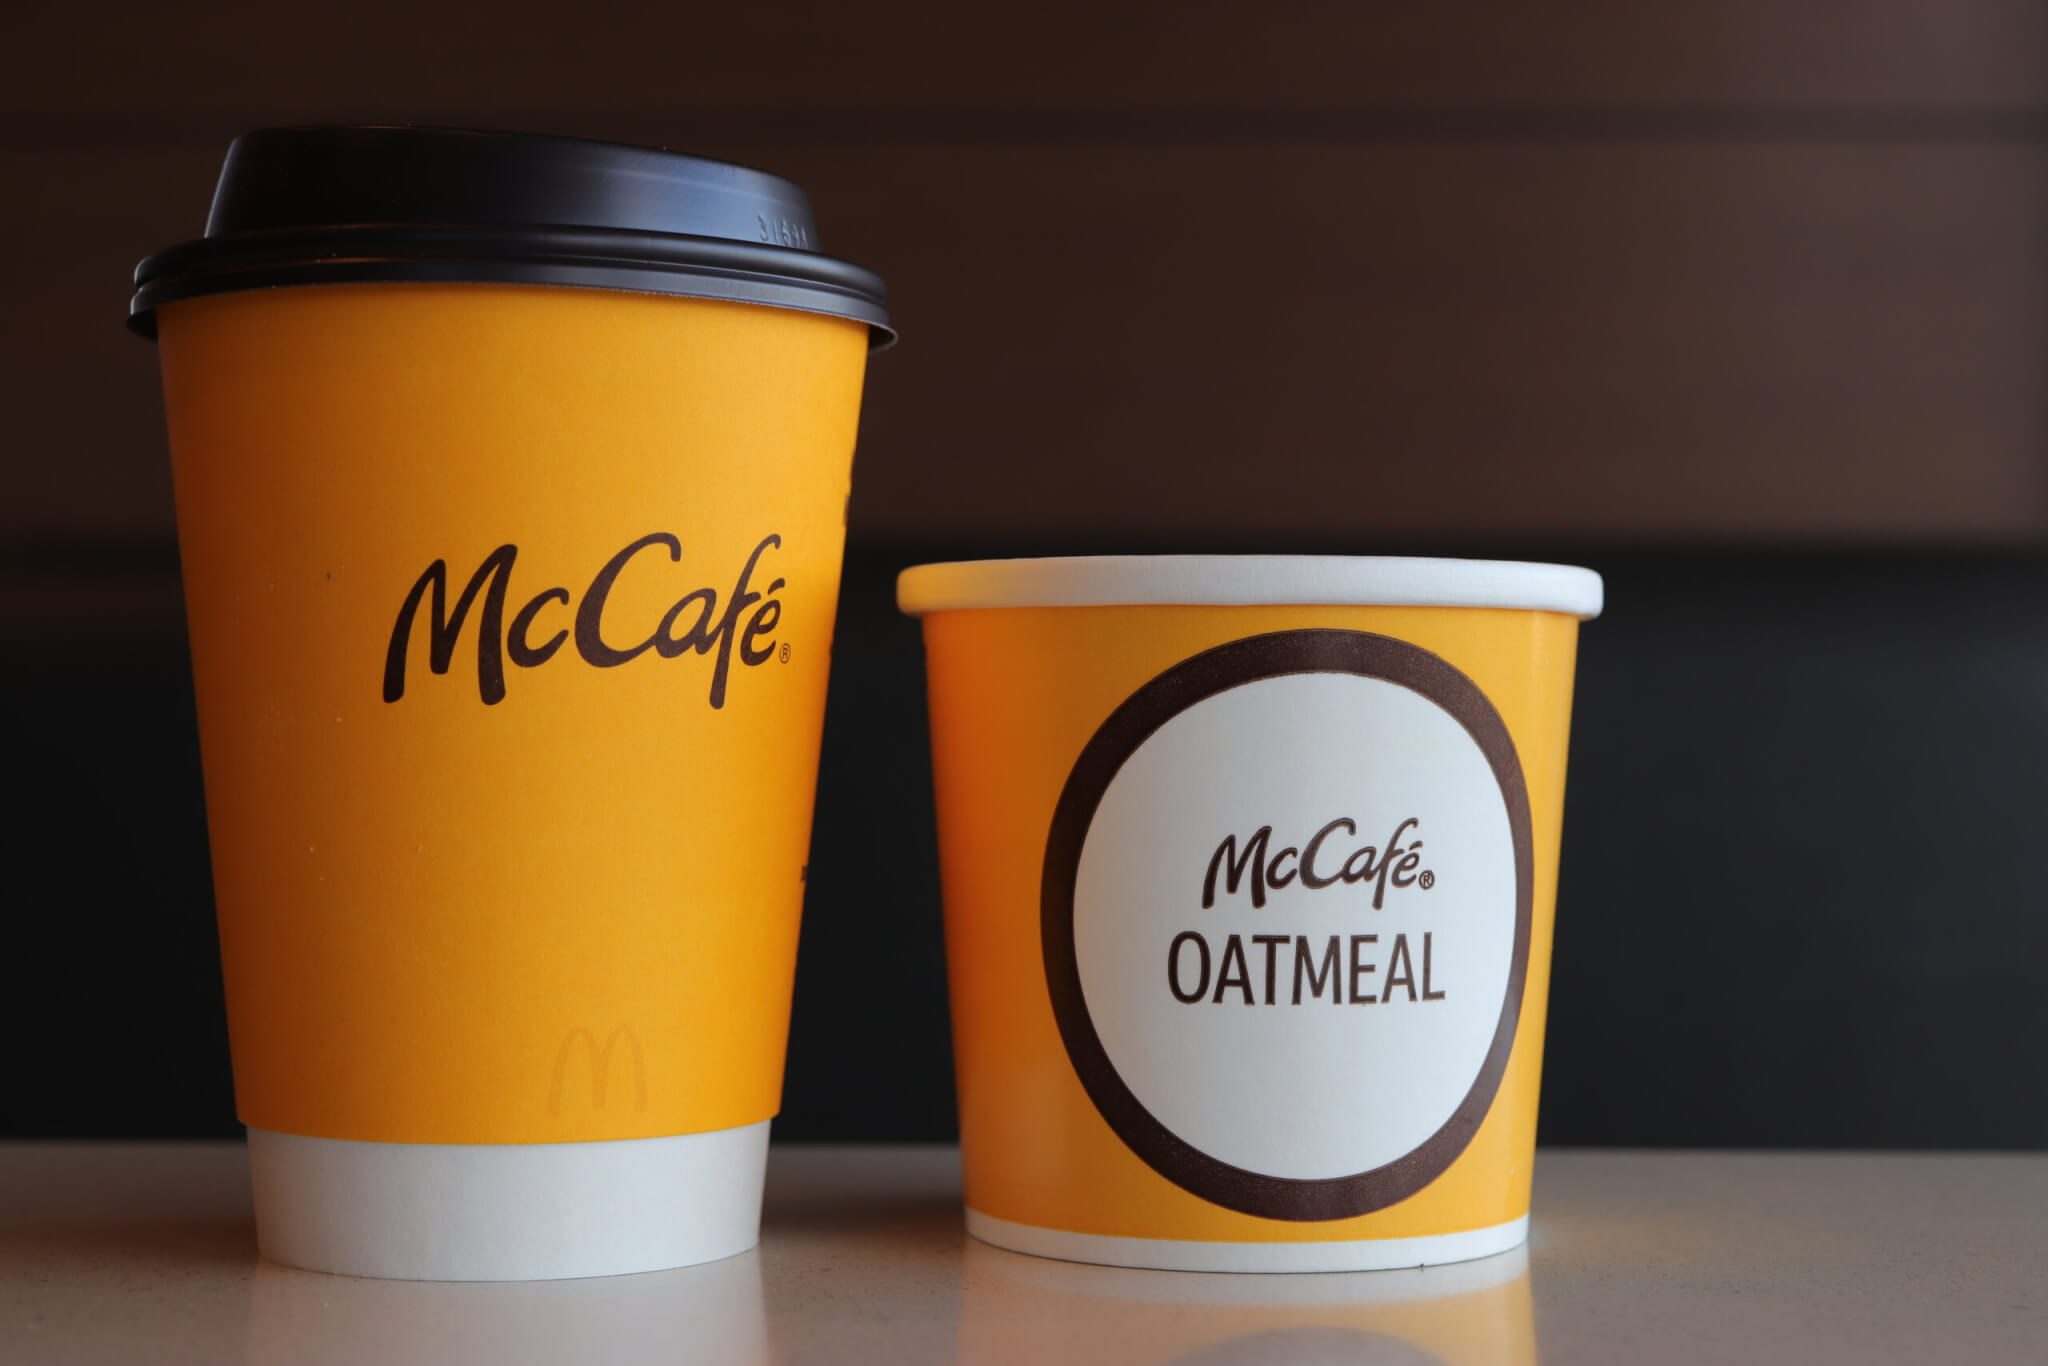 Mcdonald's McCafe and Oatmeal